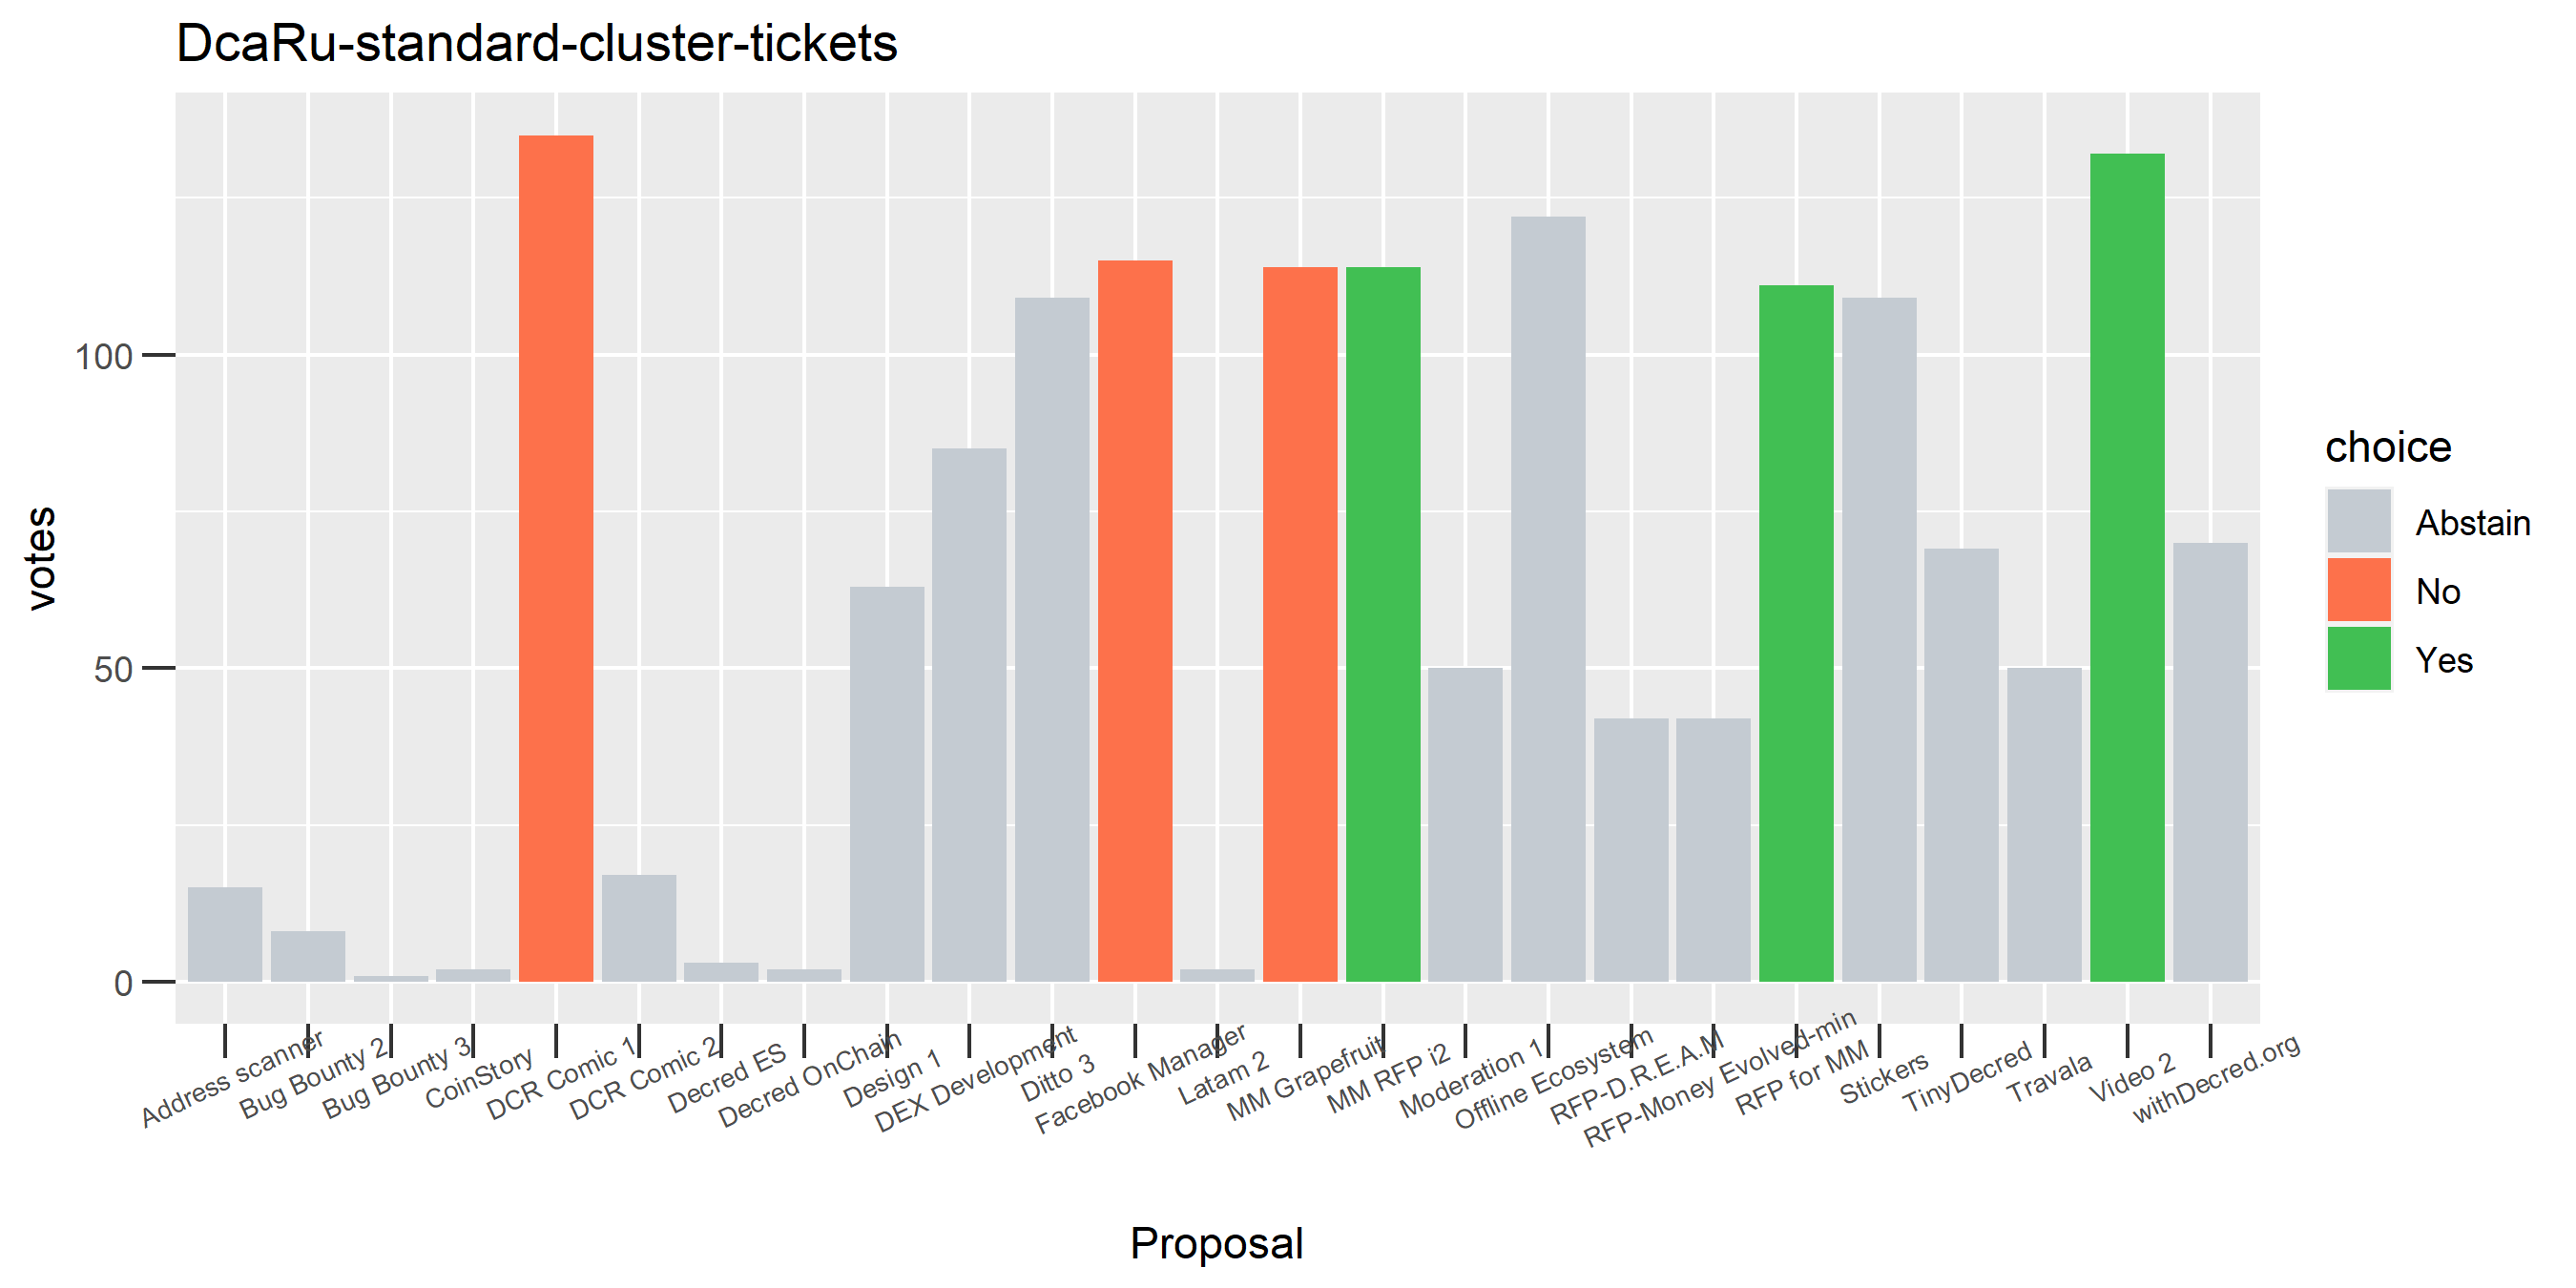 DcaRu-standard-cluster-tickets